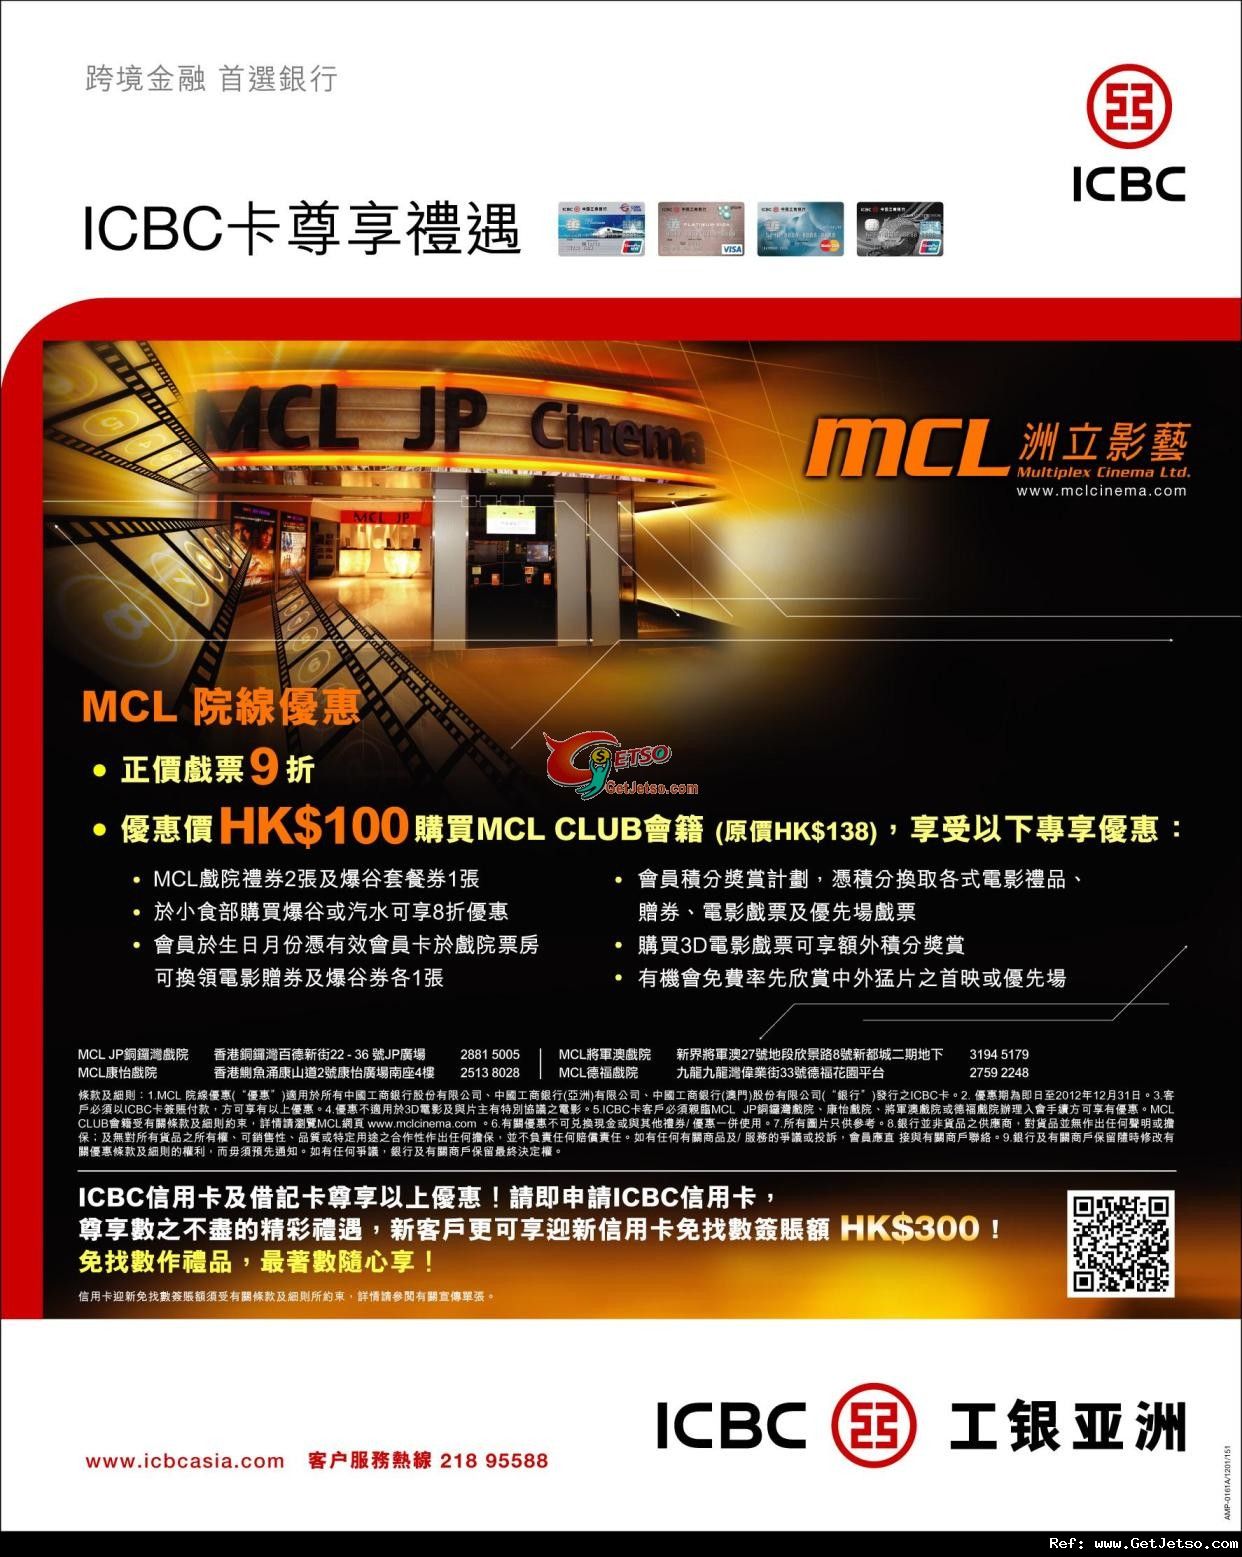 ICBC信用卡享MCL正價戲票9折及MCL CLUB入會優惠(至12年12月31日)圖片1